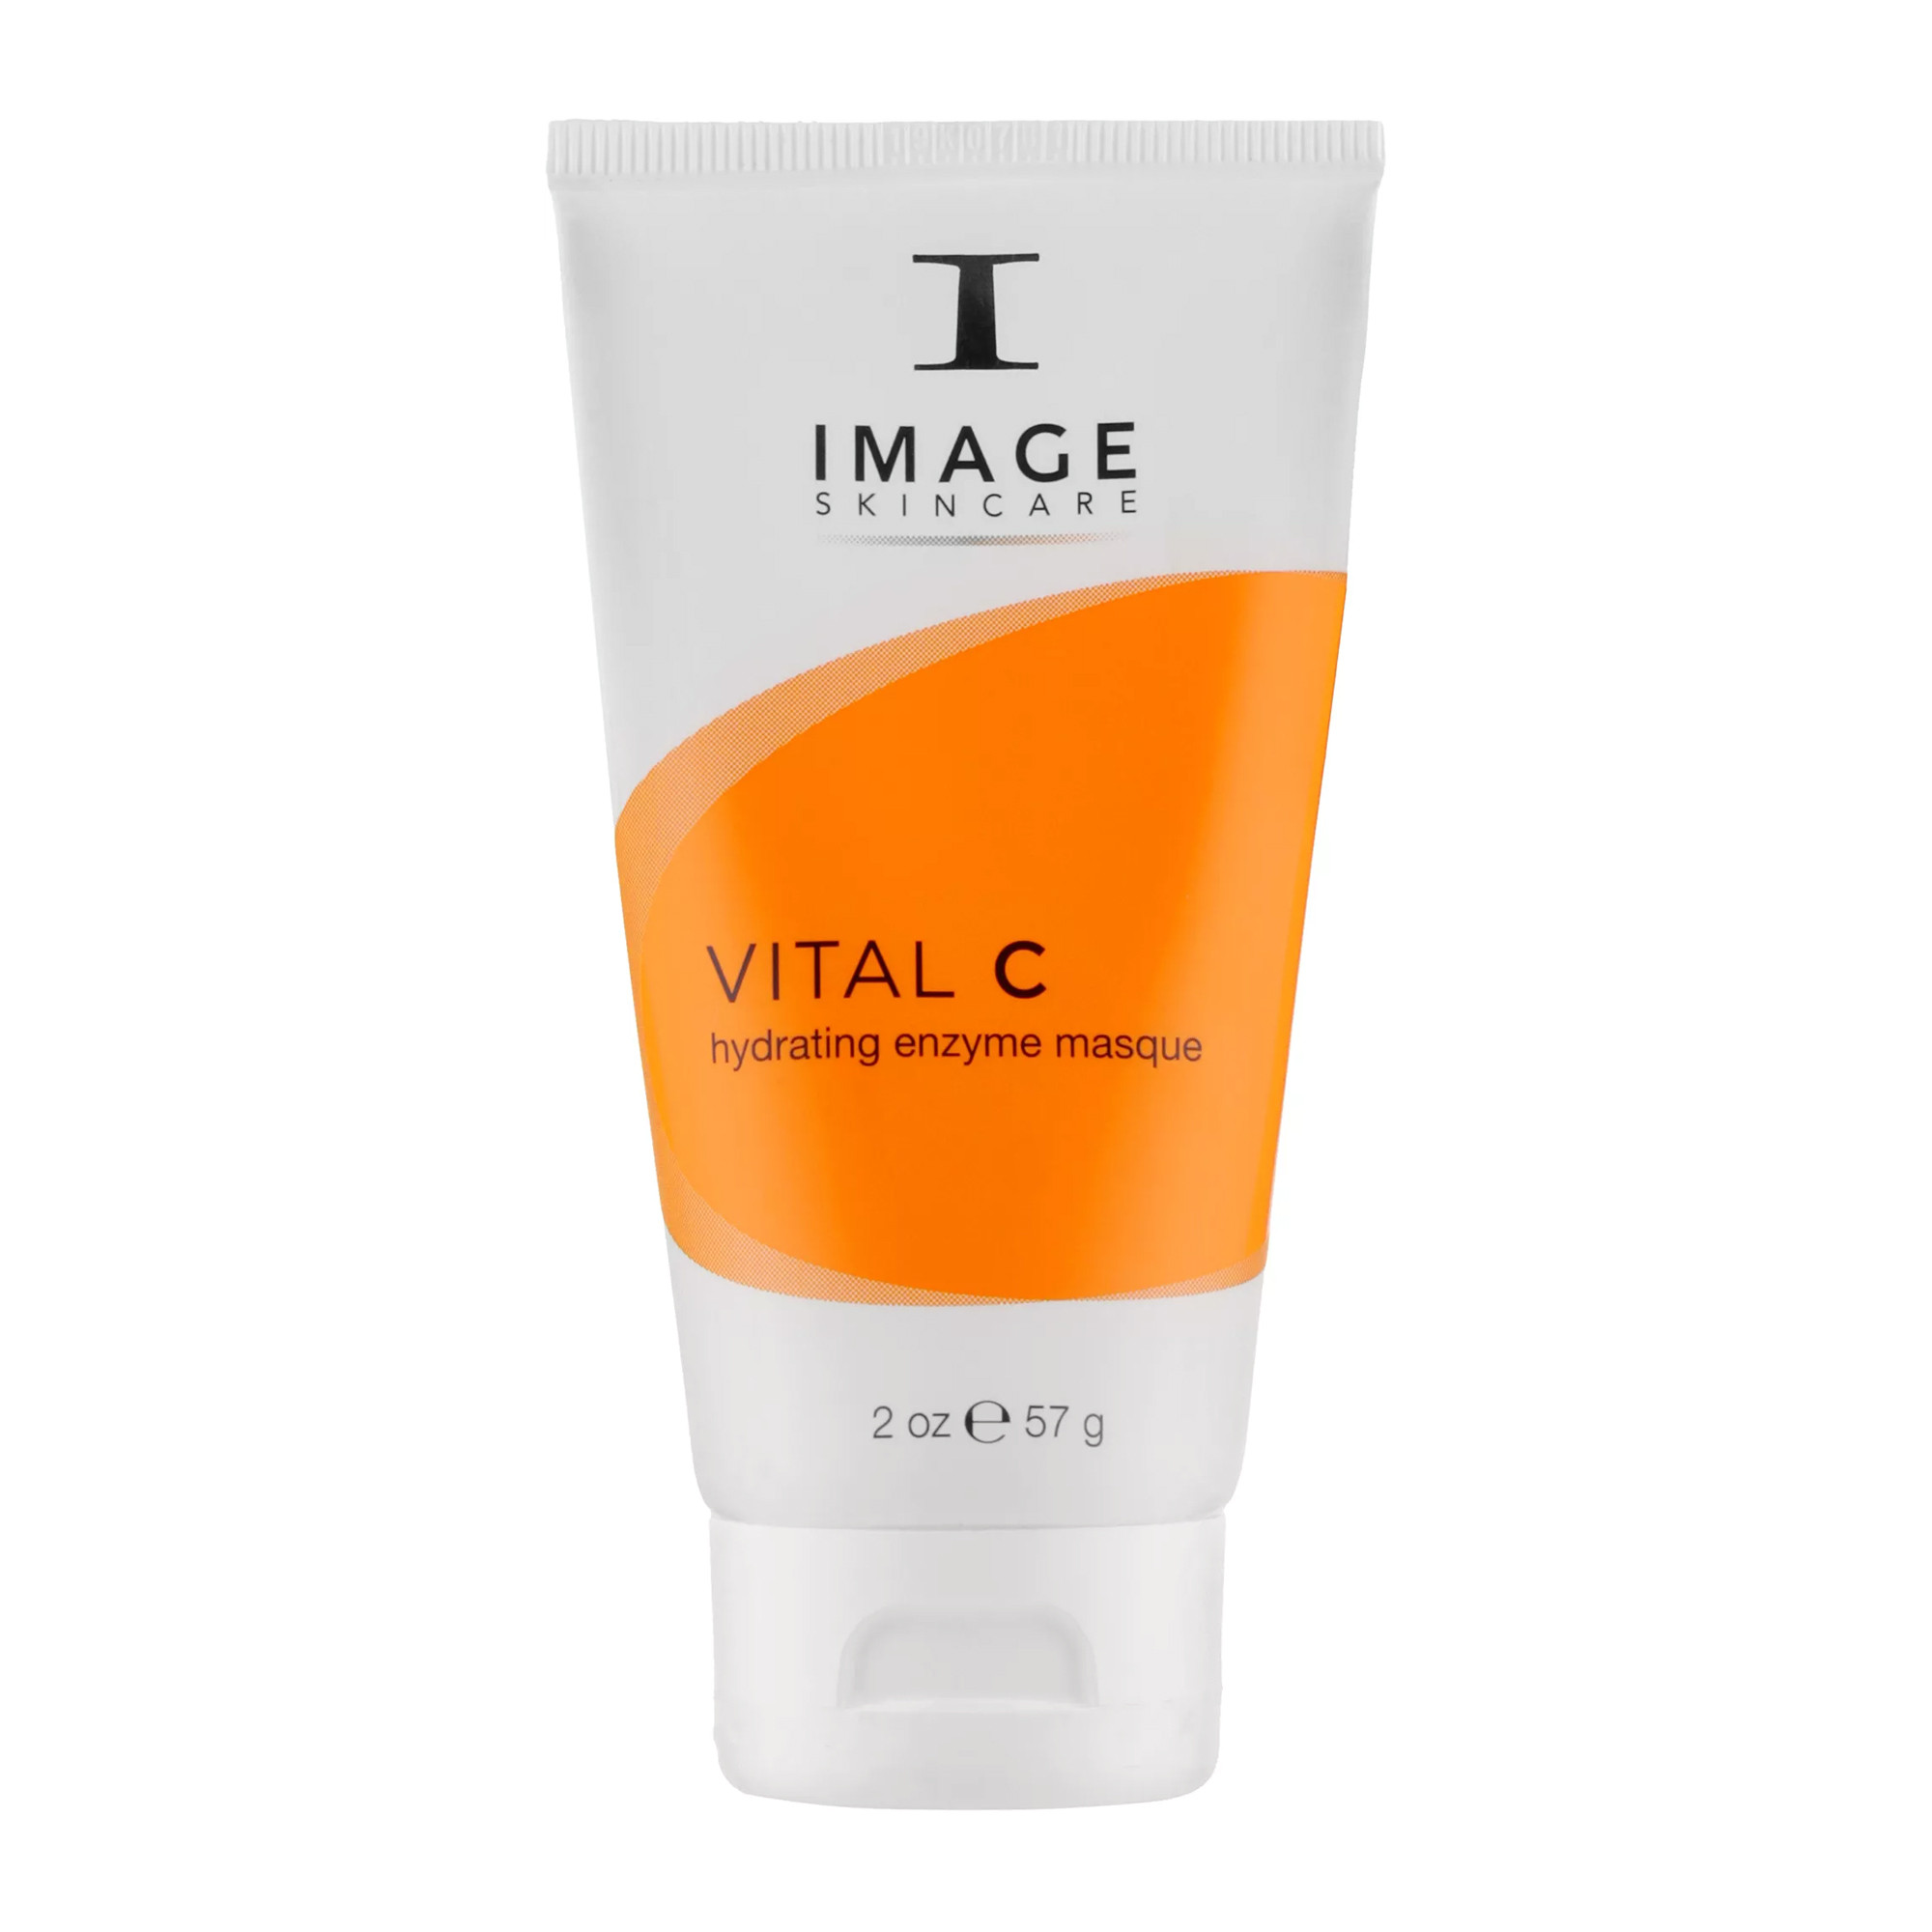 Image Skincare Vital C Hydrating Enzyme Masque Энзимная маска